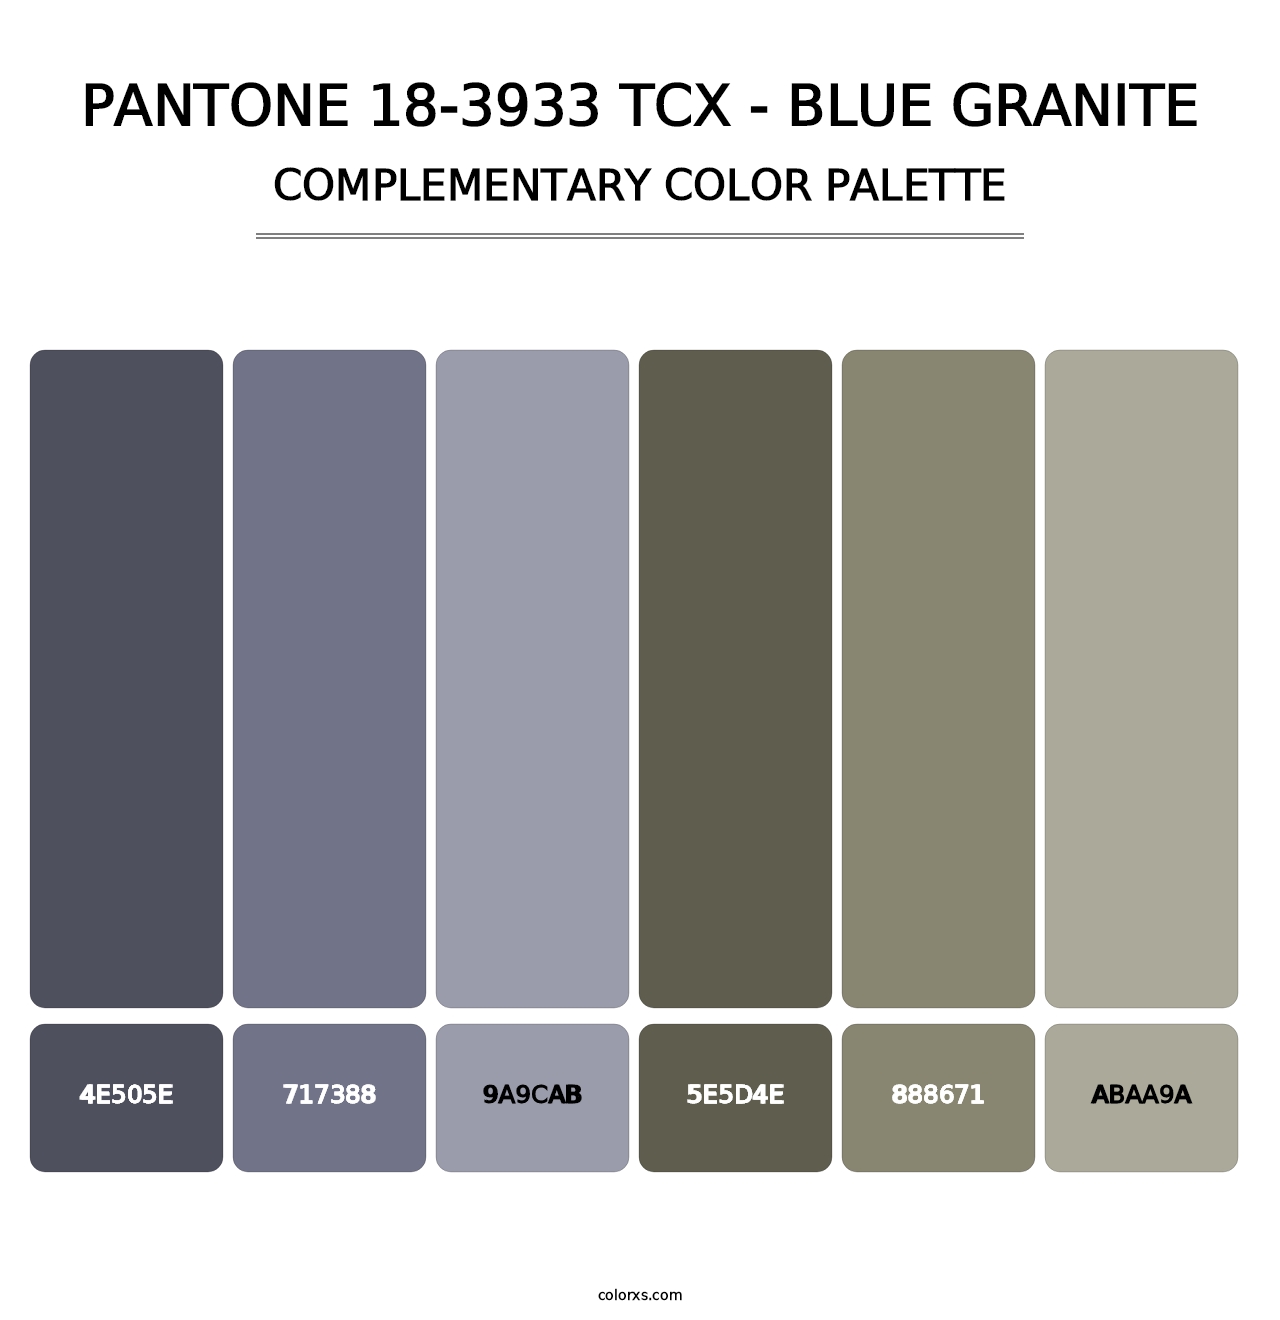 PANTONE 18-3933 TCX - Blue Granite - Complementary Color Palette